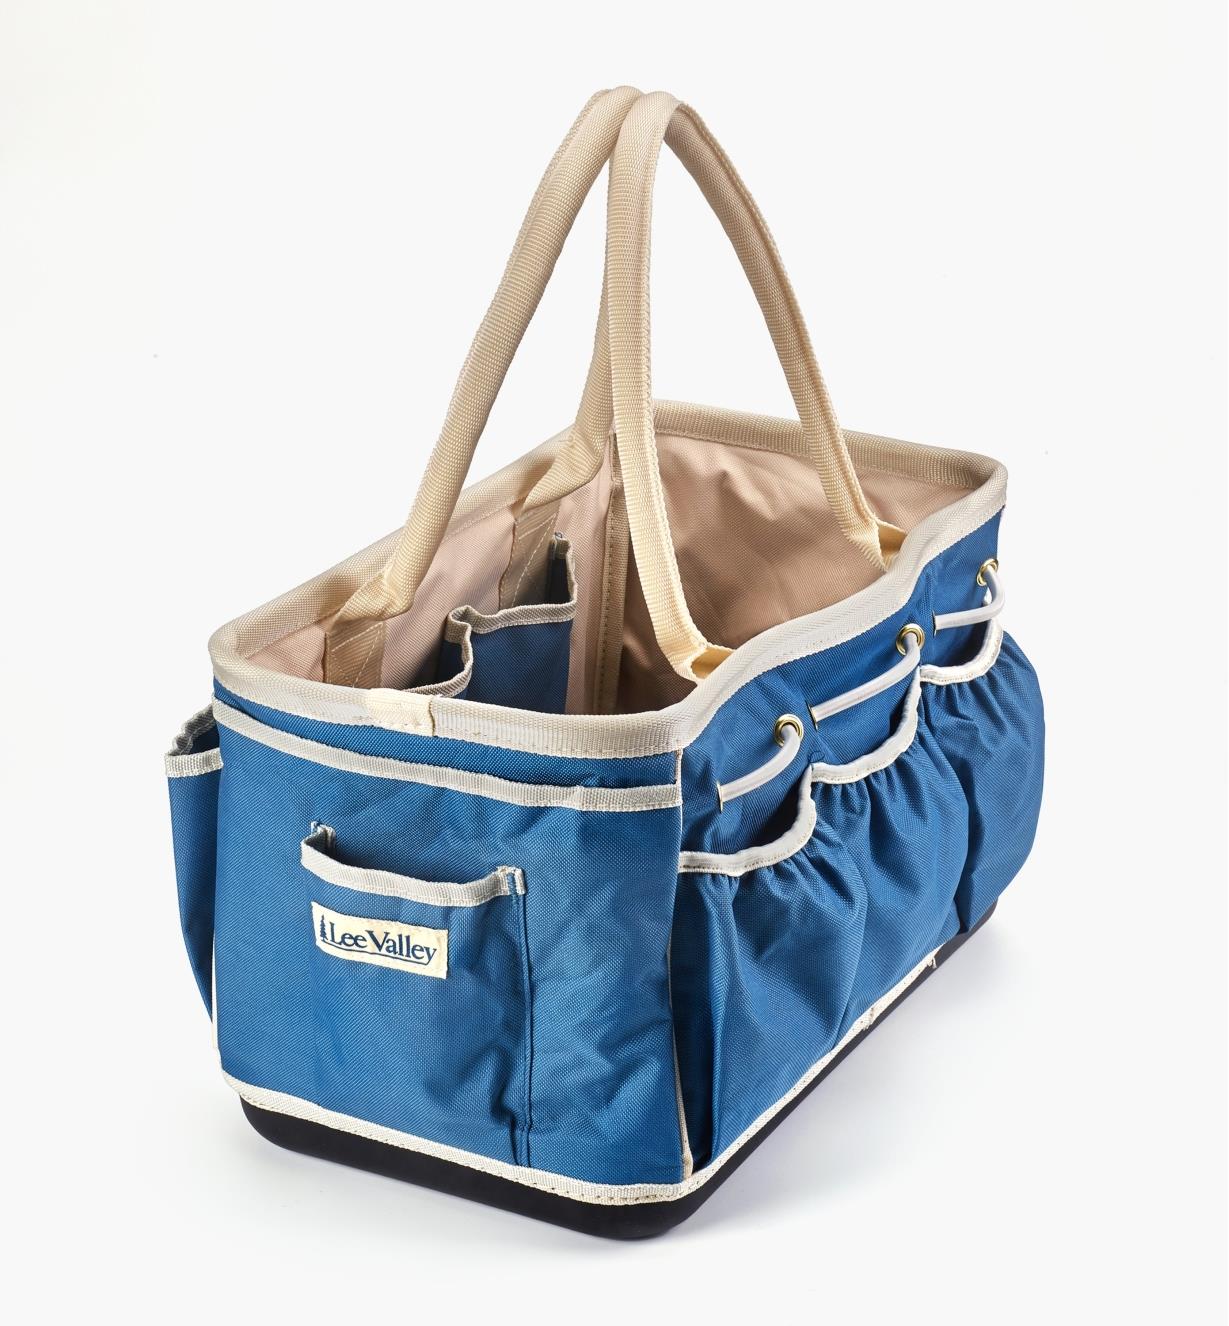 99W0225 - Lee Valley Garden Tote Bag, Blue